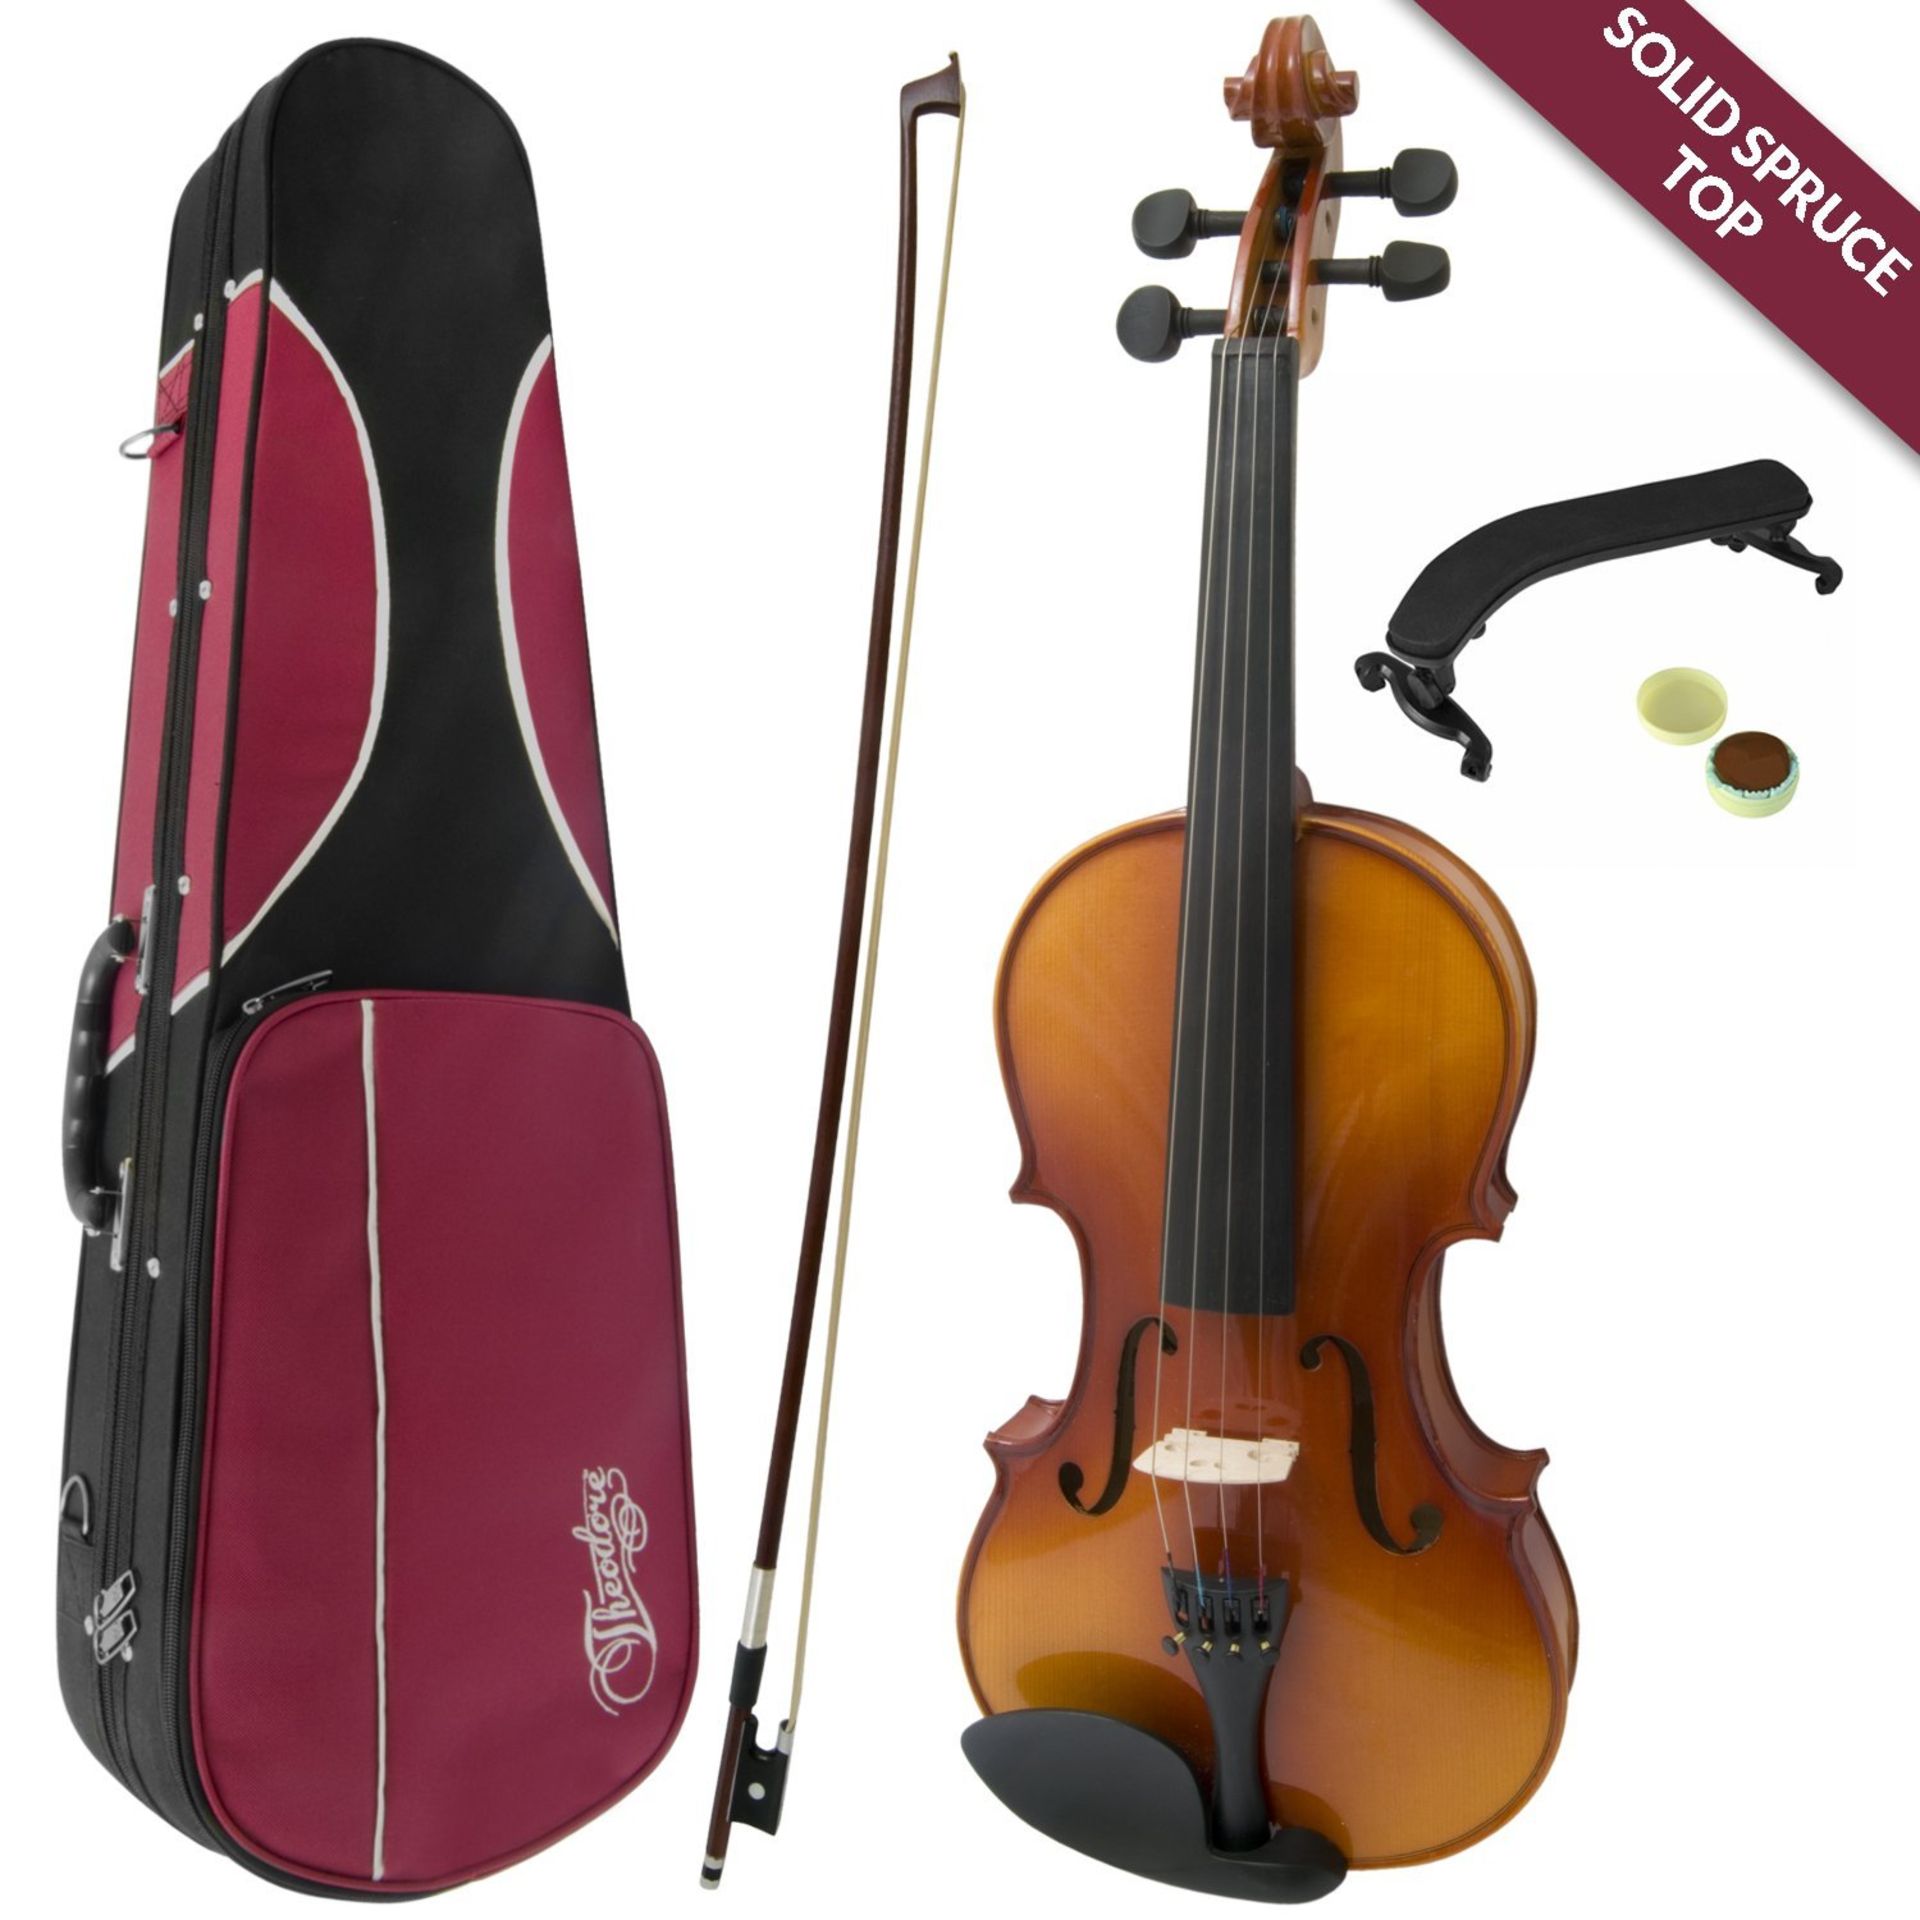 Theodore VLN16-1-2 Childrens Violin - Beginners 1/2 Size RRP £79.99